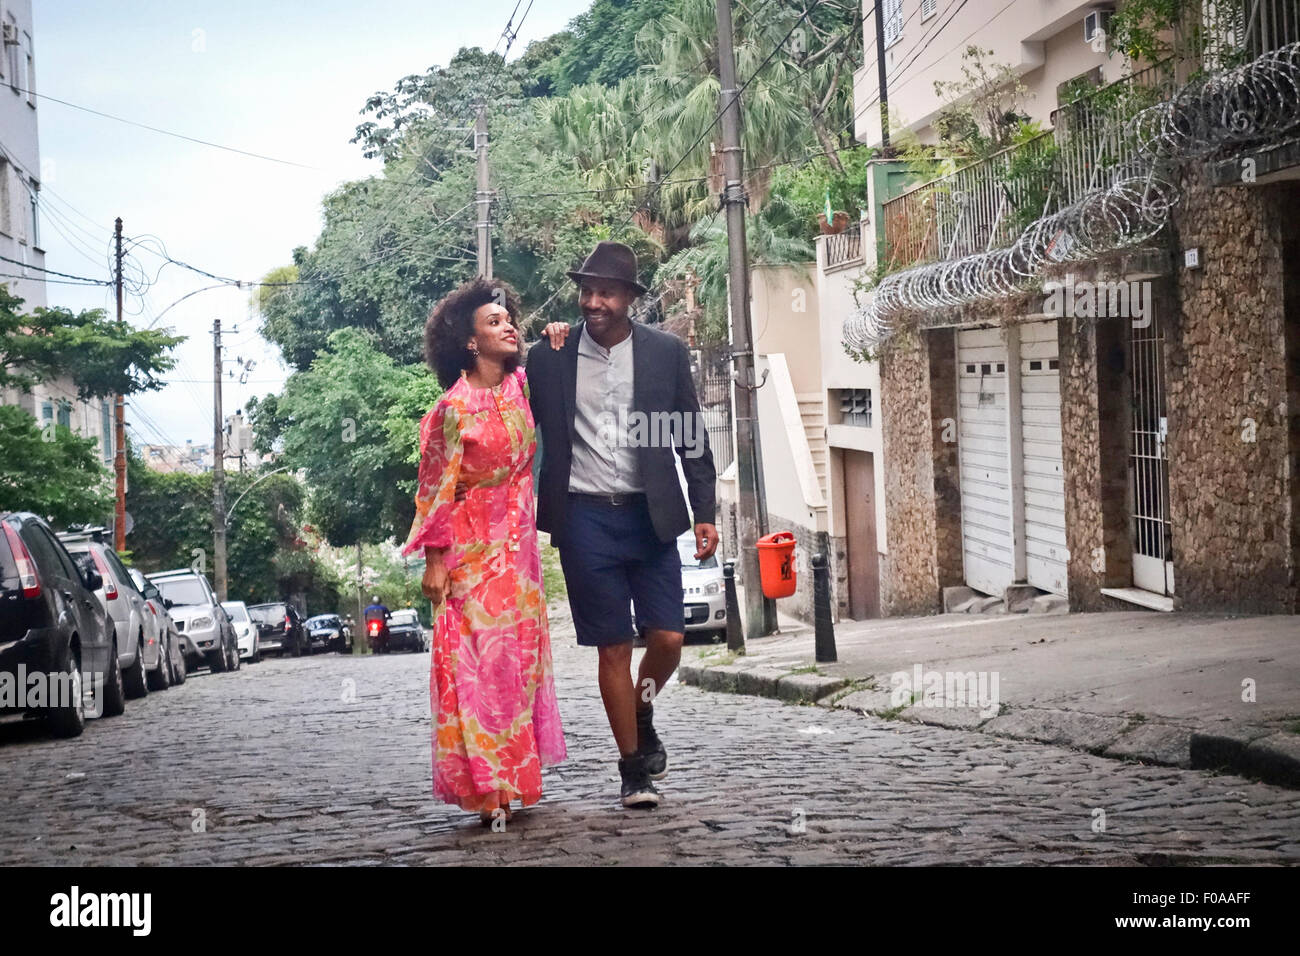 Couple walking down rue pavée, smiling Banque D'Images